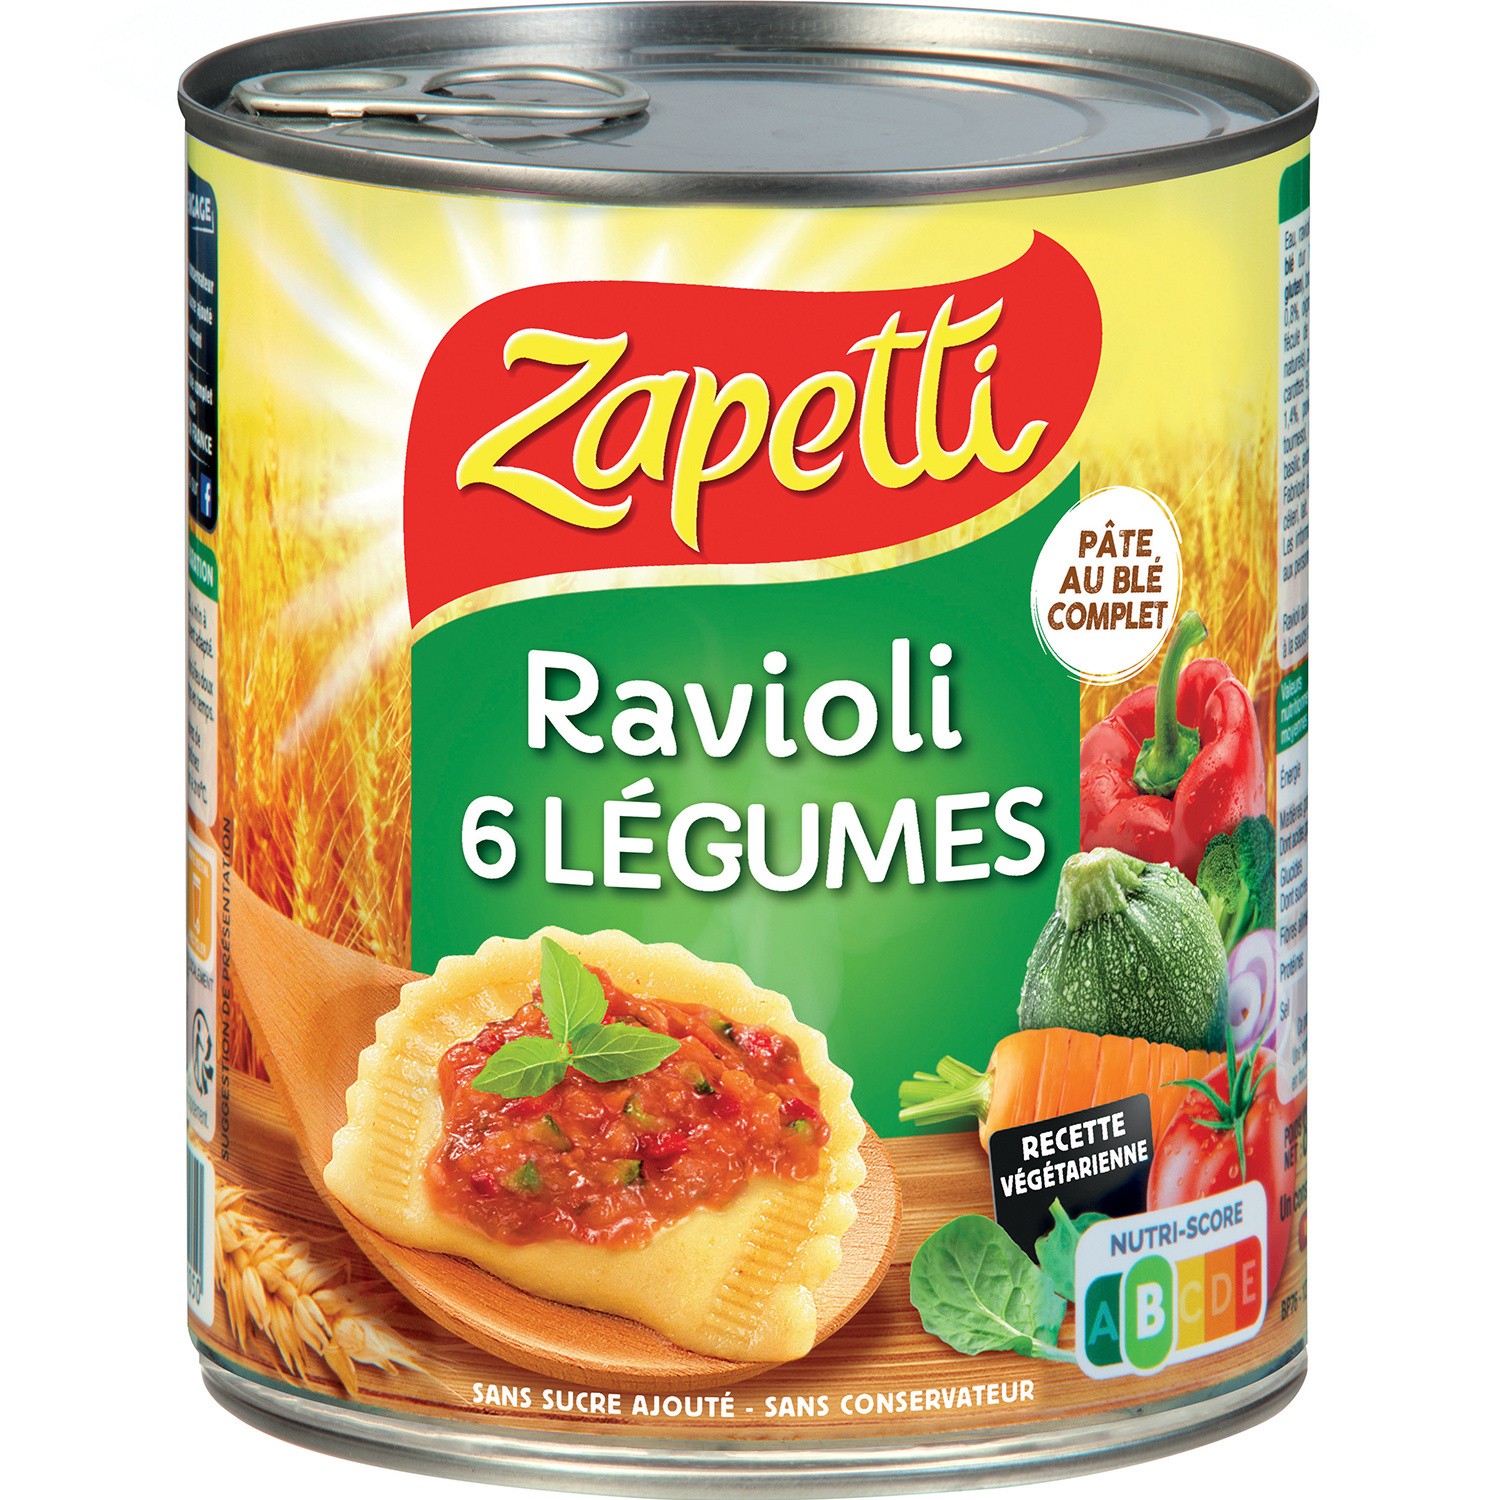 Raviloli au 6 legumes sauce tomate et basilic 4x4